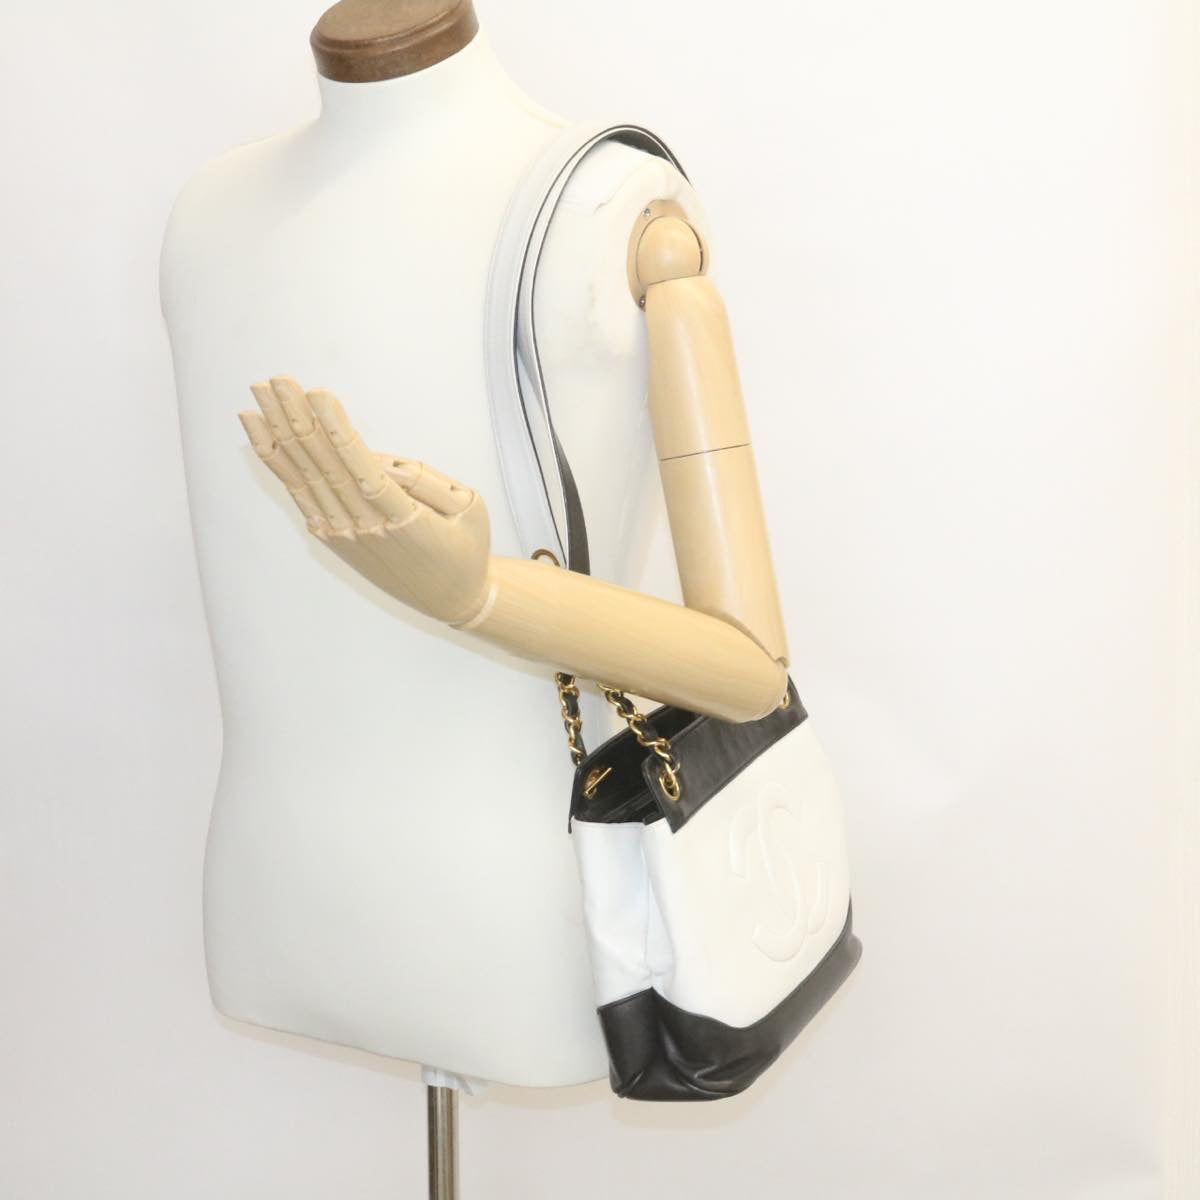 CHANEL Chain Shoulder Bag Leather Black White CC Auth 28378A